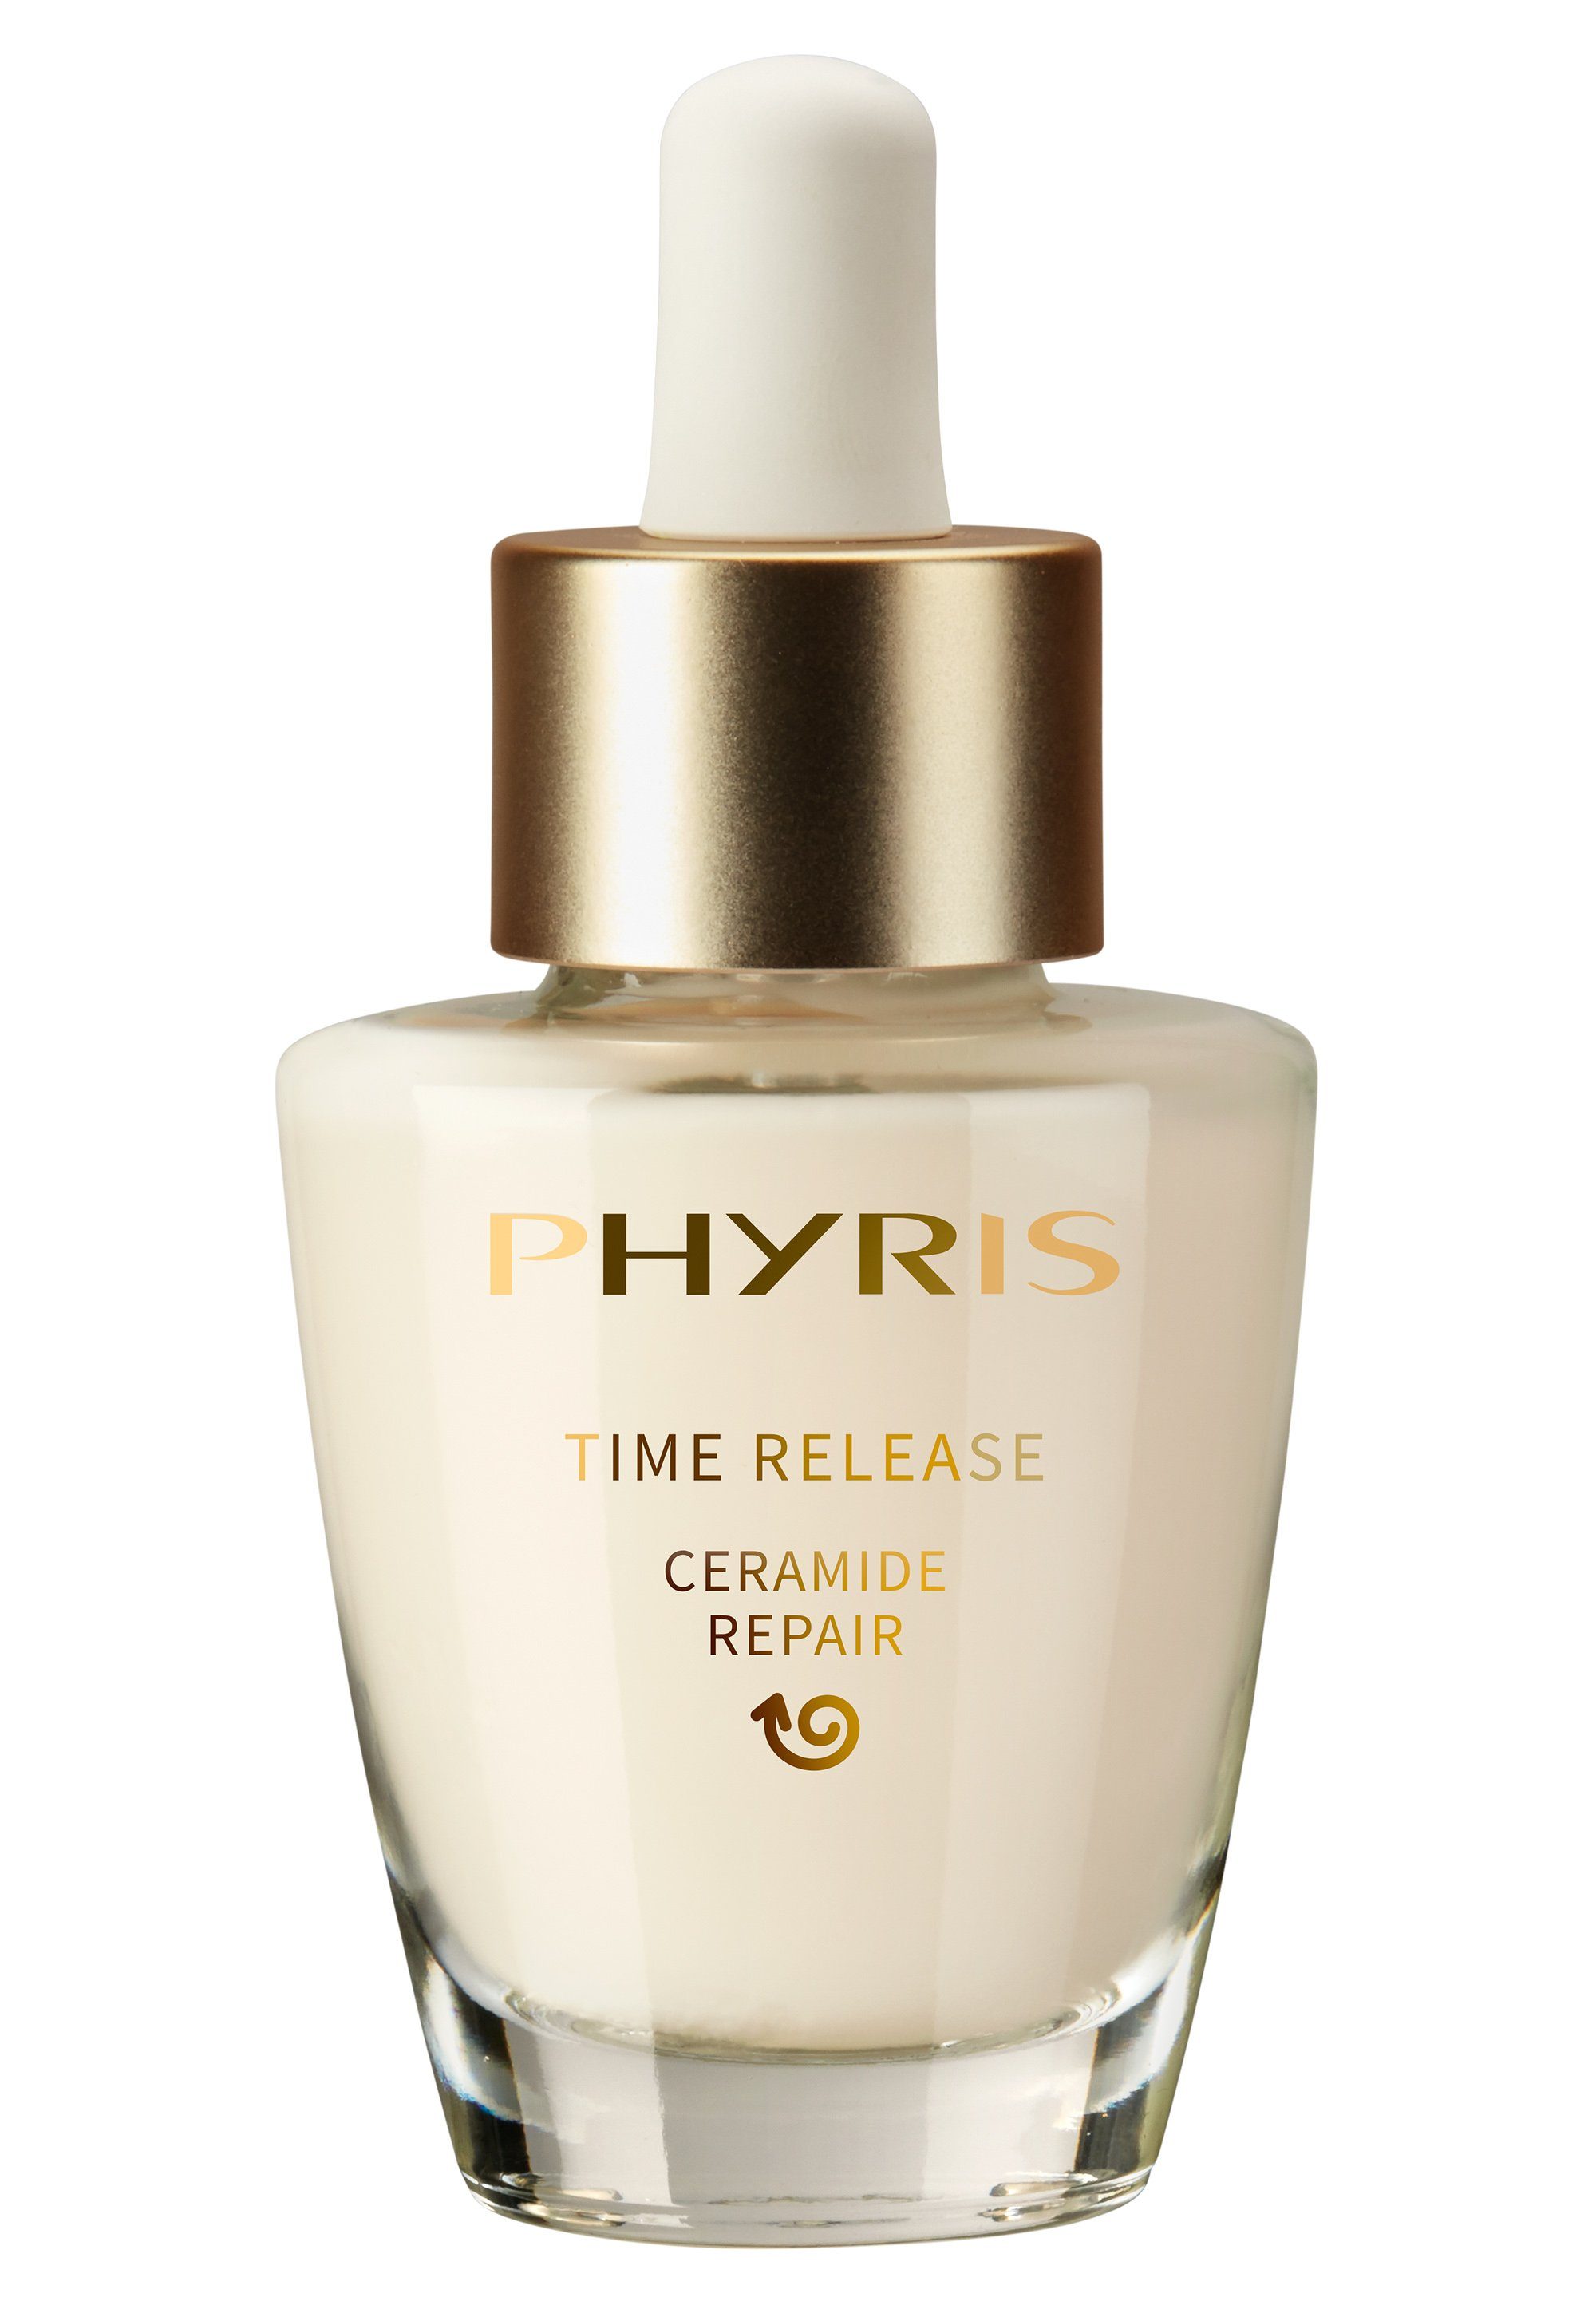 PHYRIS Gesichtsfluid Time Release Ceramide mit Inhalt 30 Repair, ml